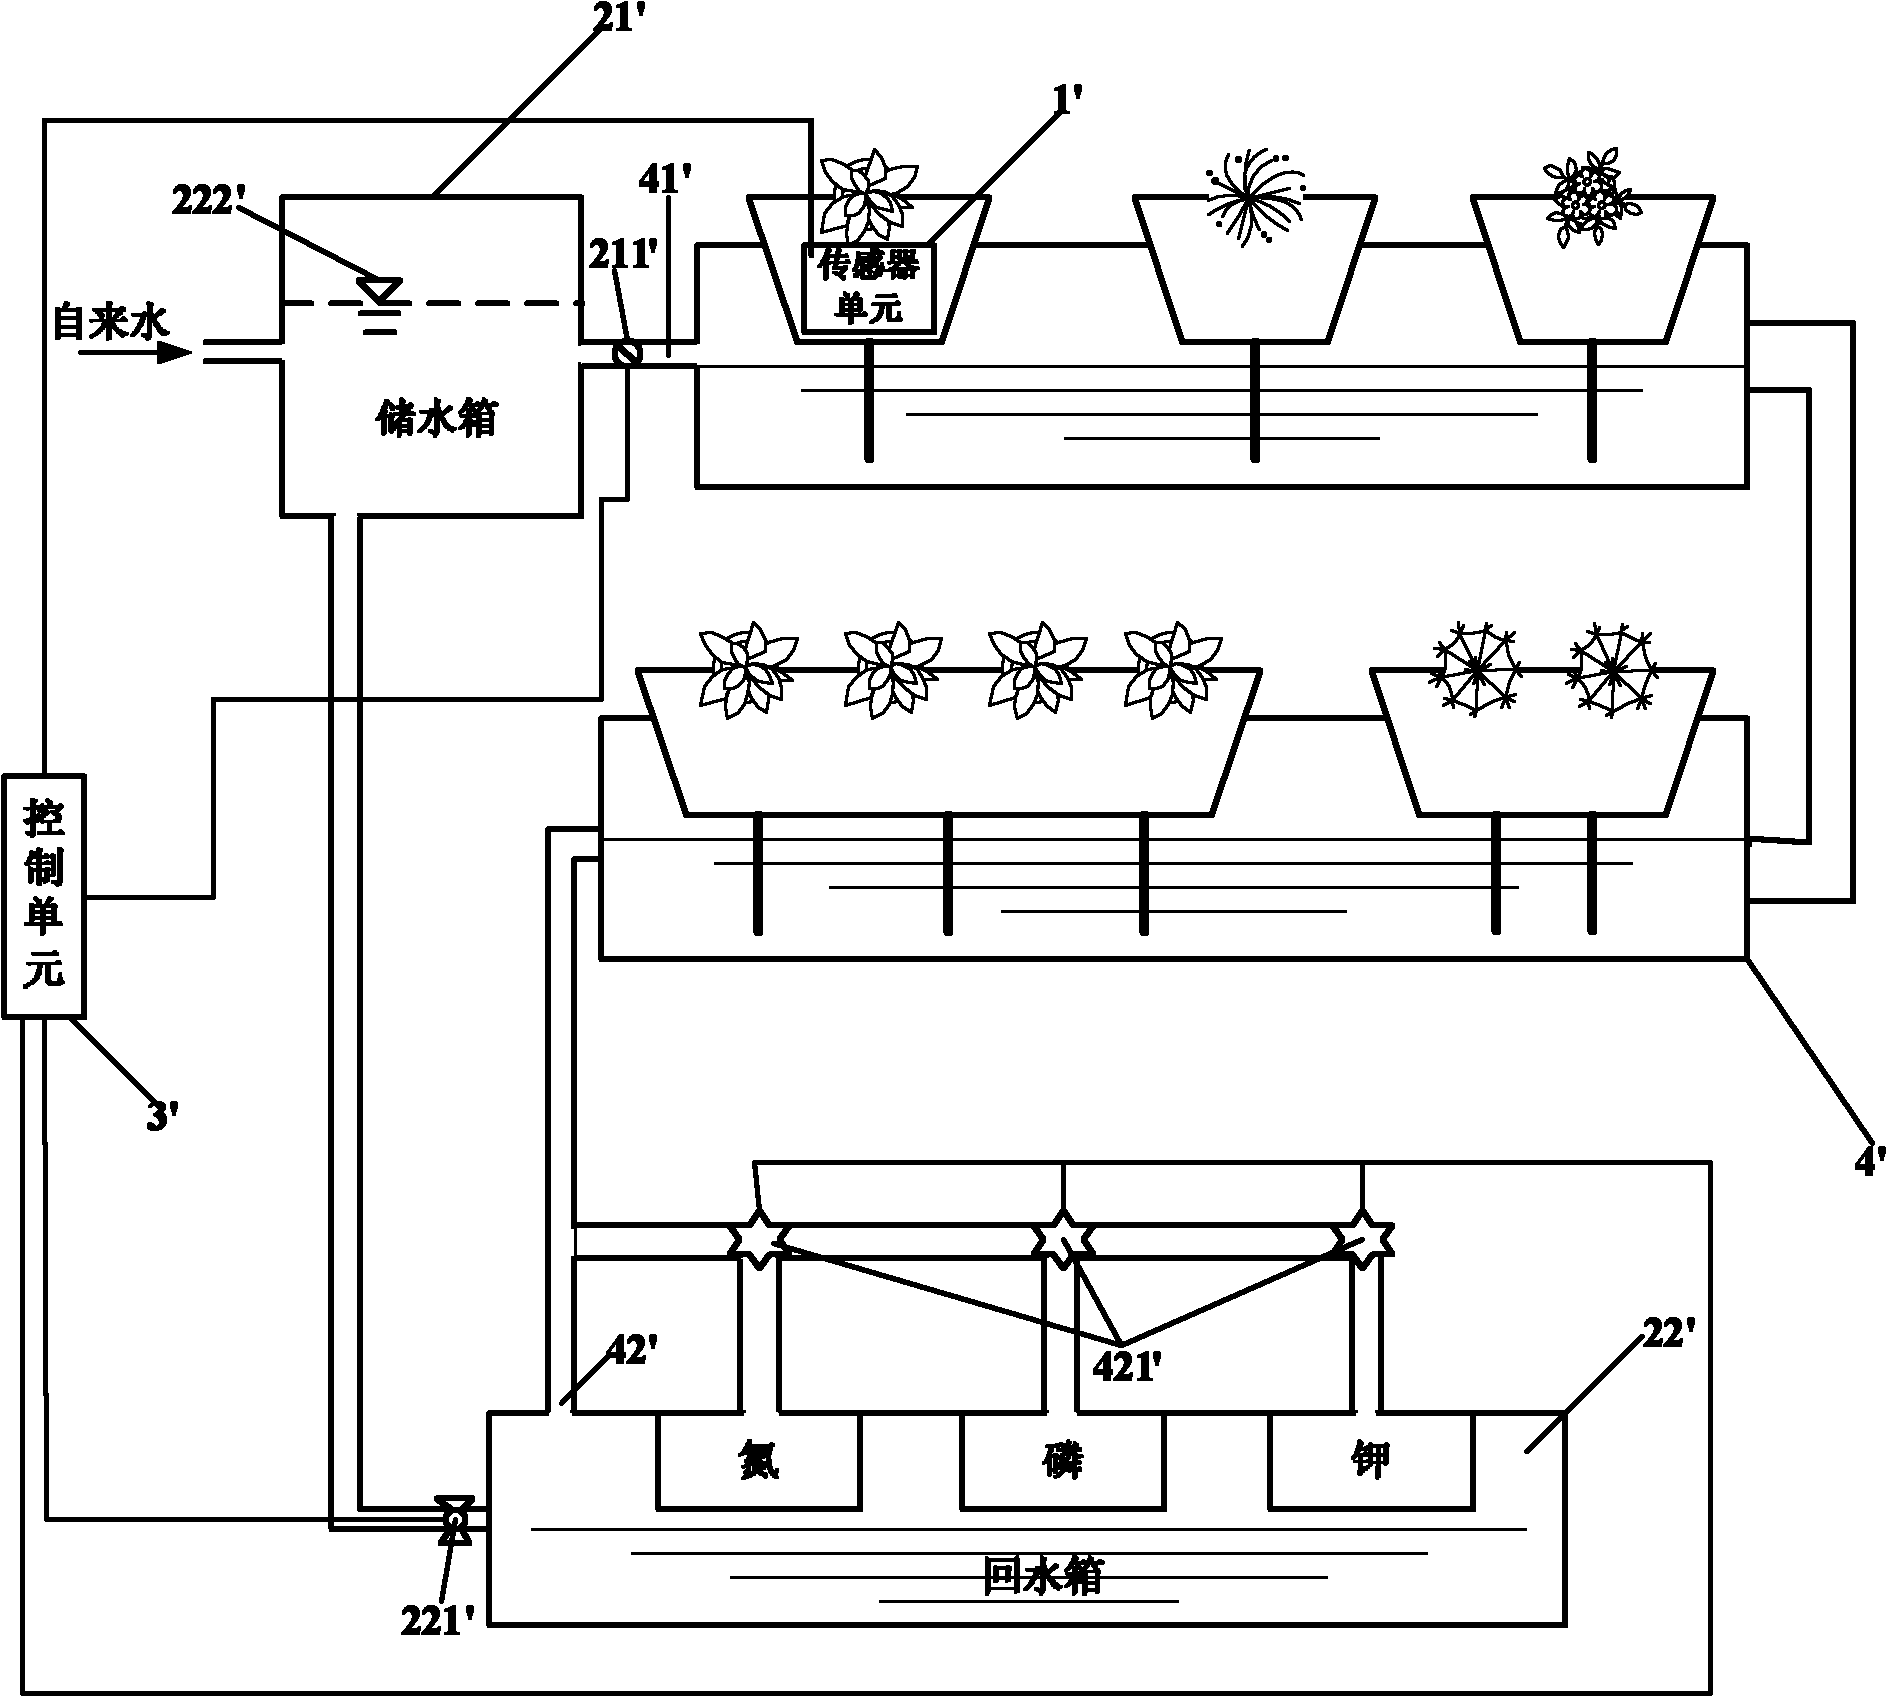 Plant irrigation system